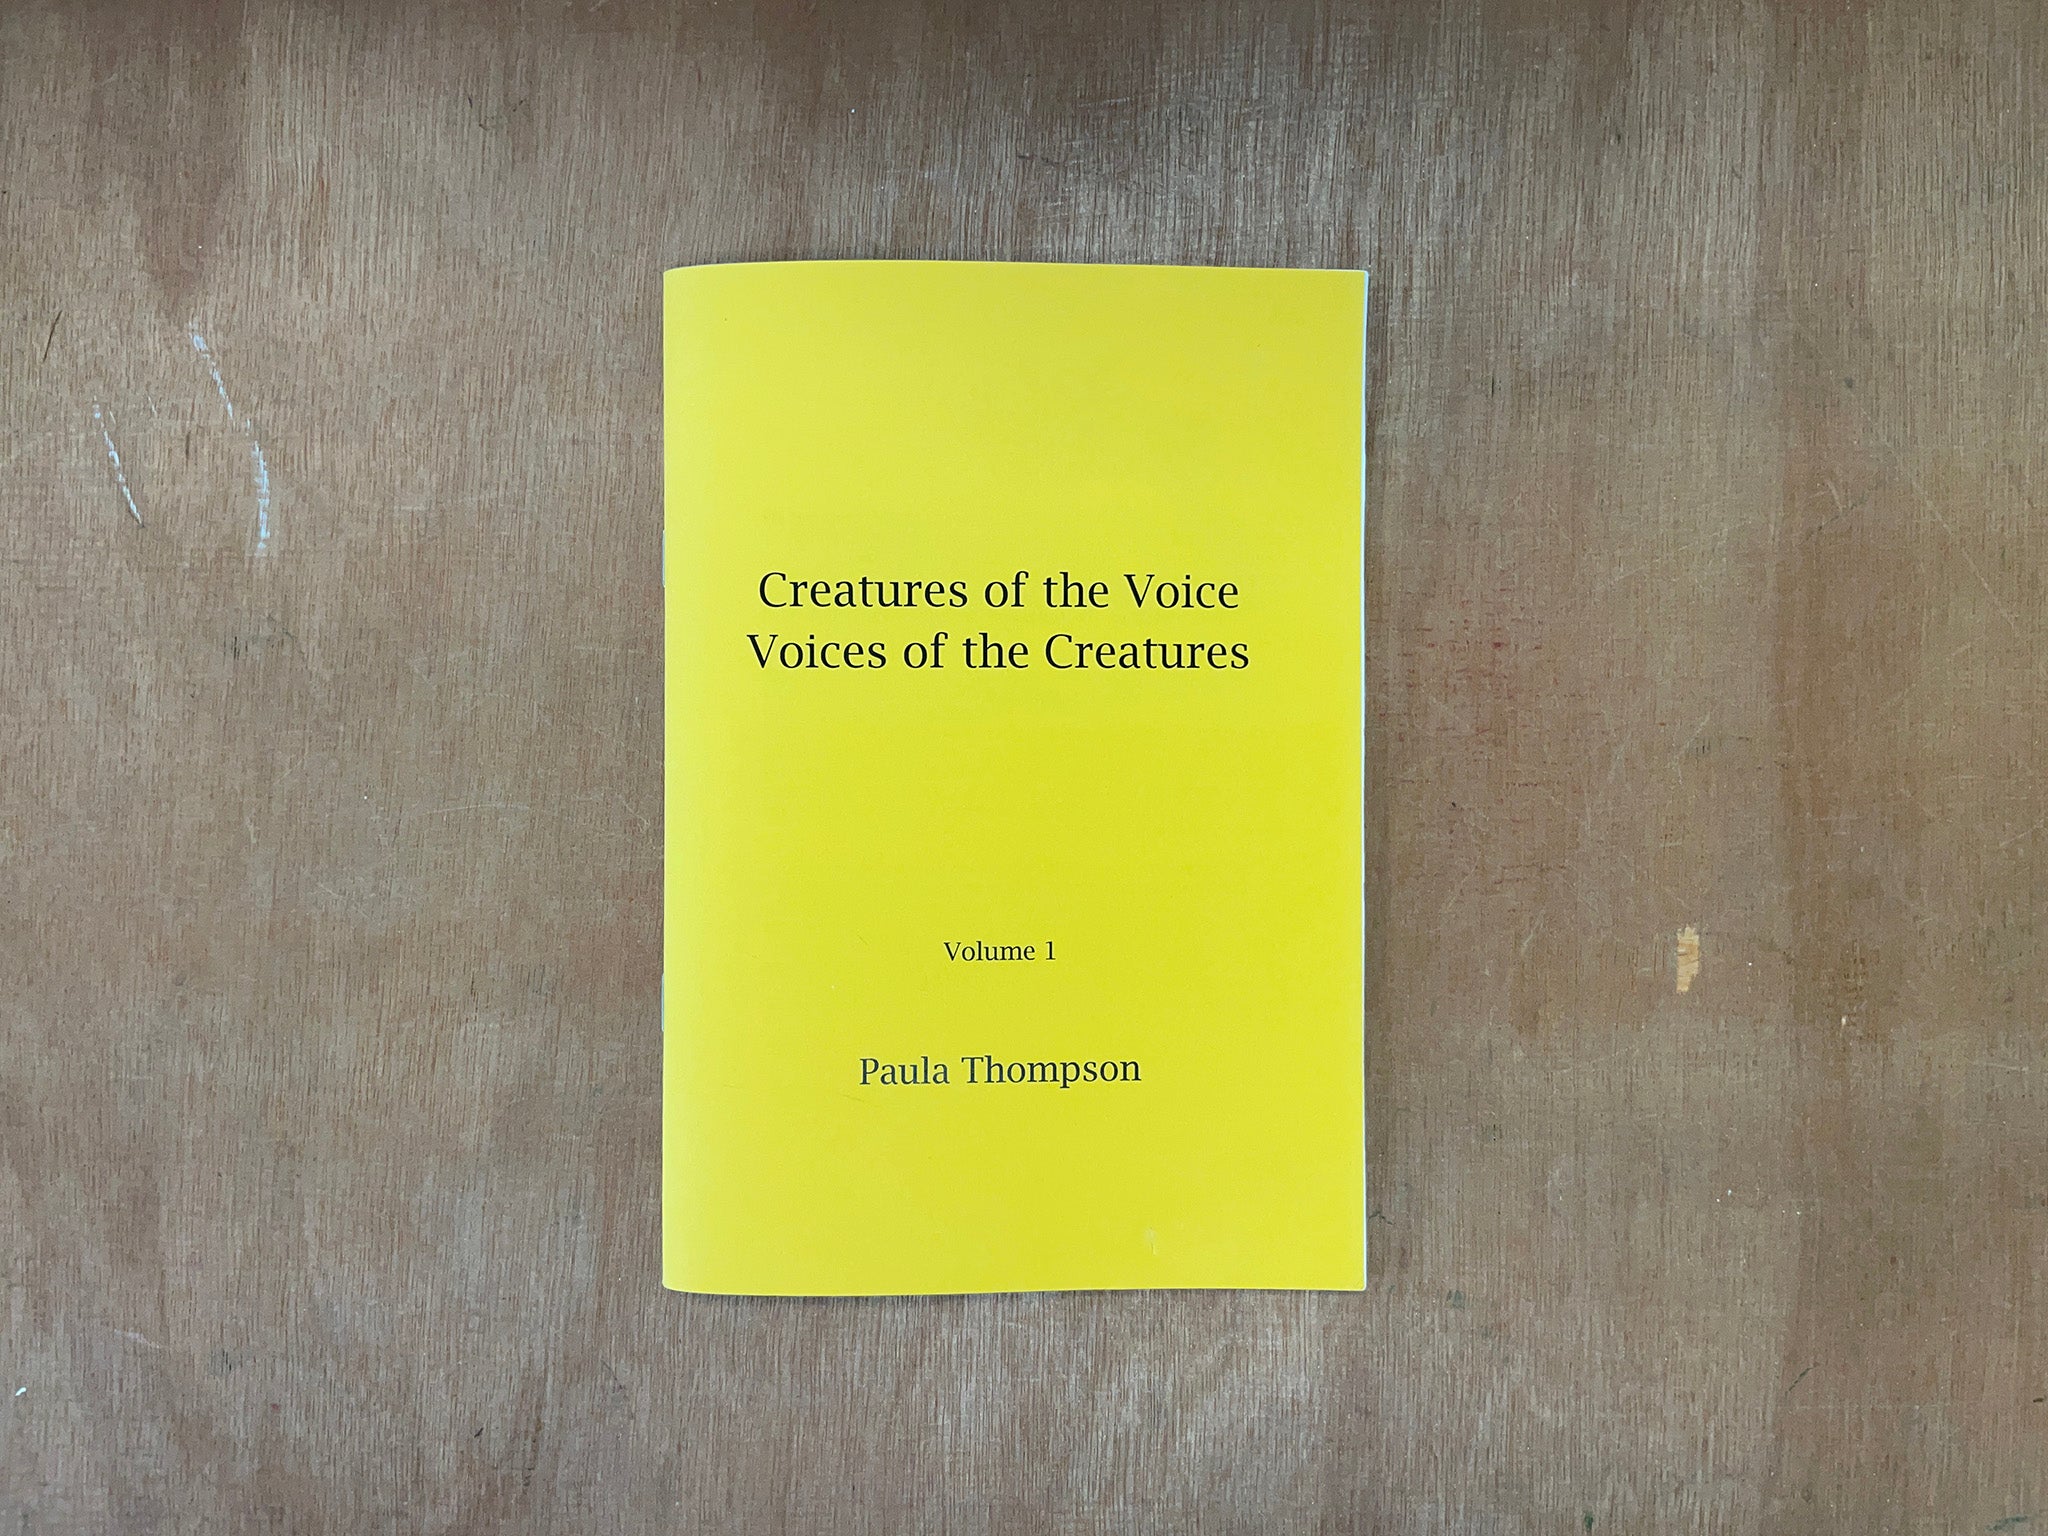 CREATURES OF THE VOICE / VOICES OF THE CREATURES by Paula Thompson